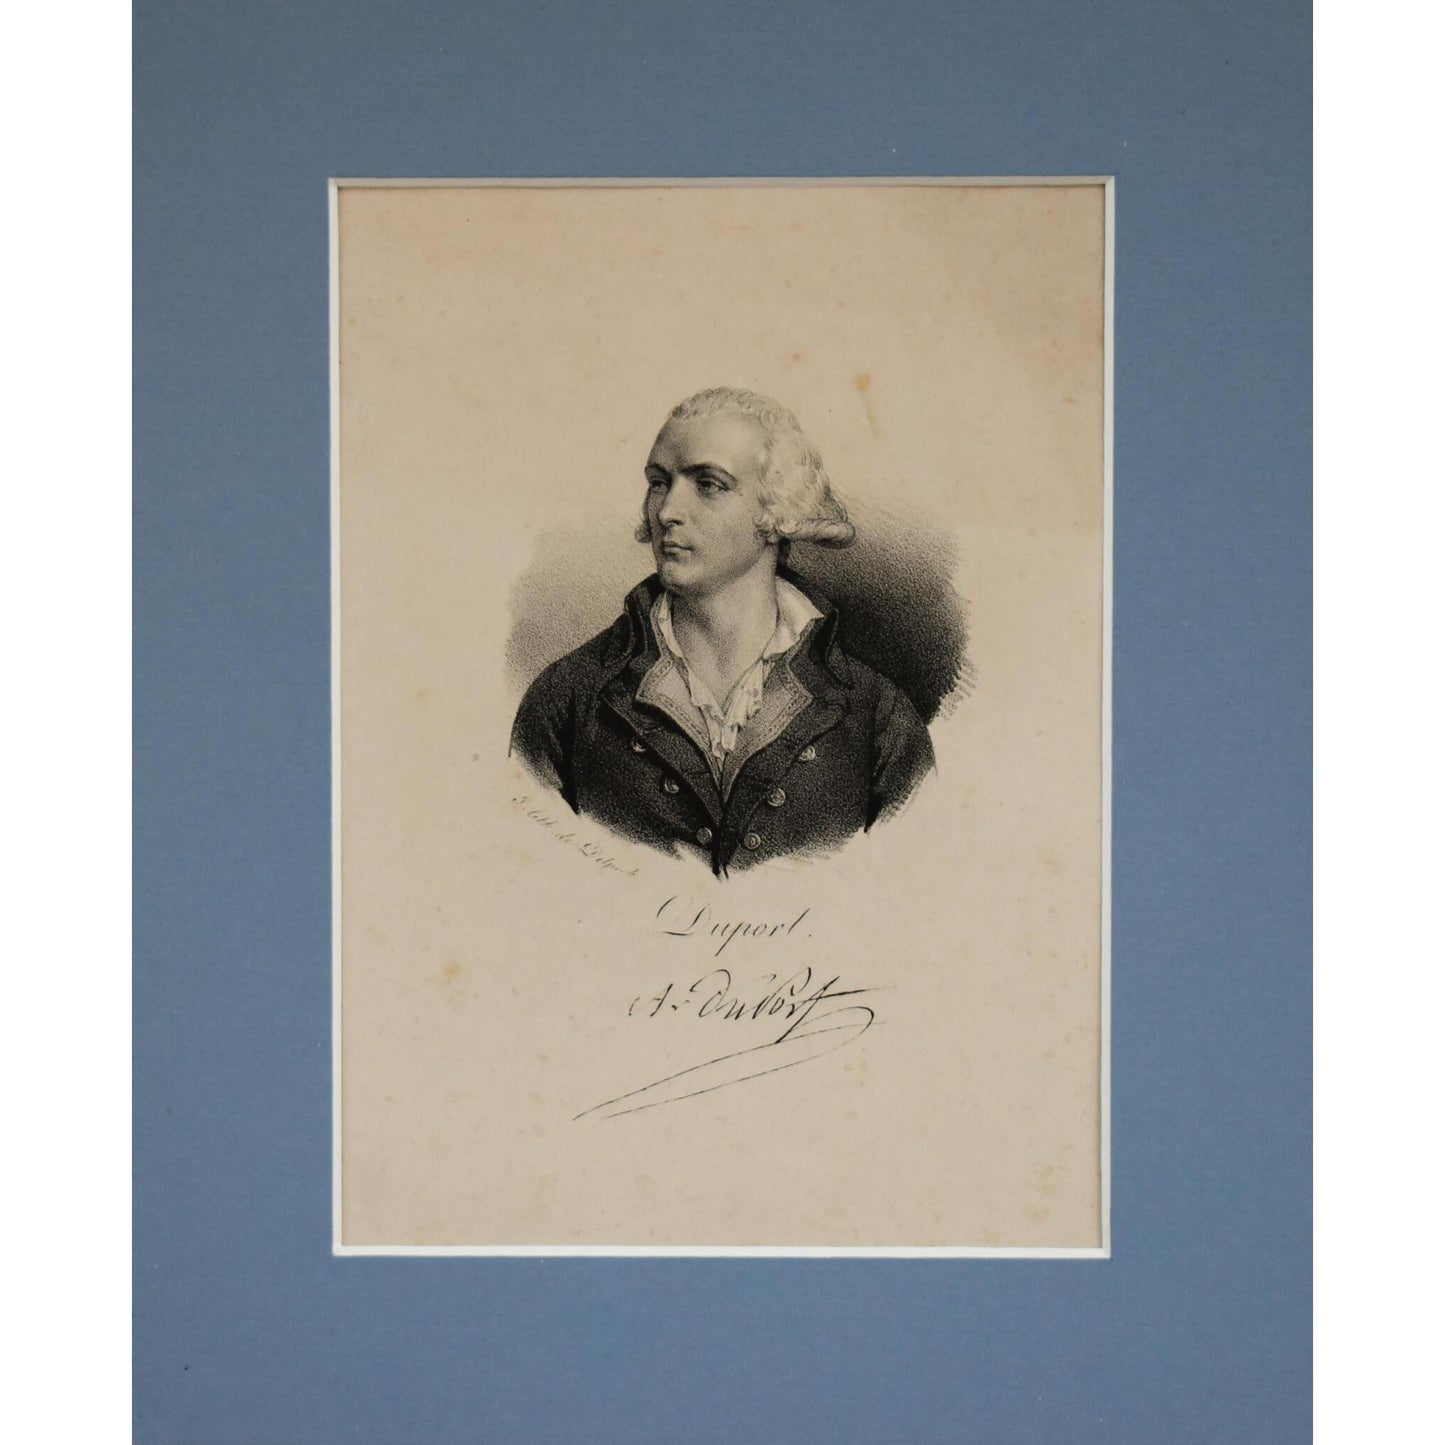 Antique lithograph print portrait of French lawyer Adrien Duport, by François Delpech. For sale at Winckelmann Gallery.